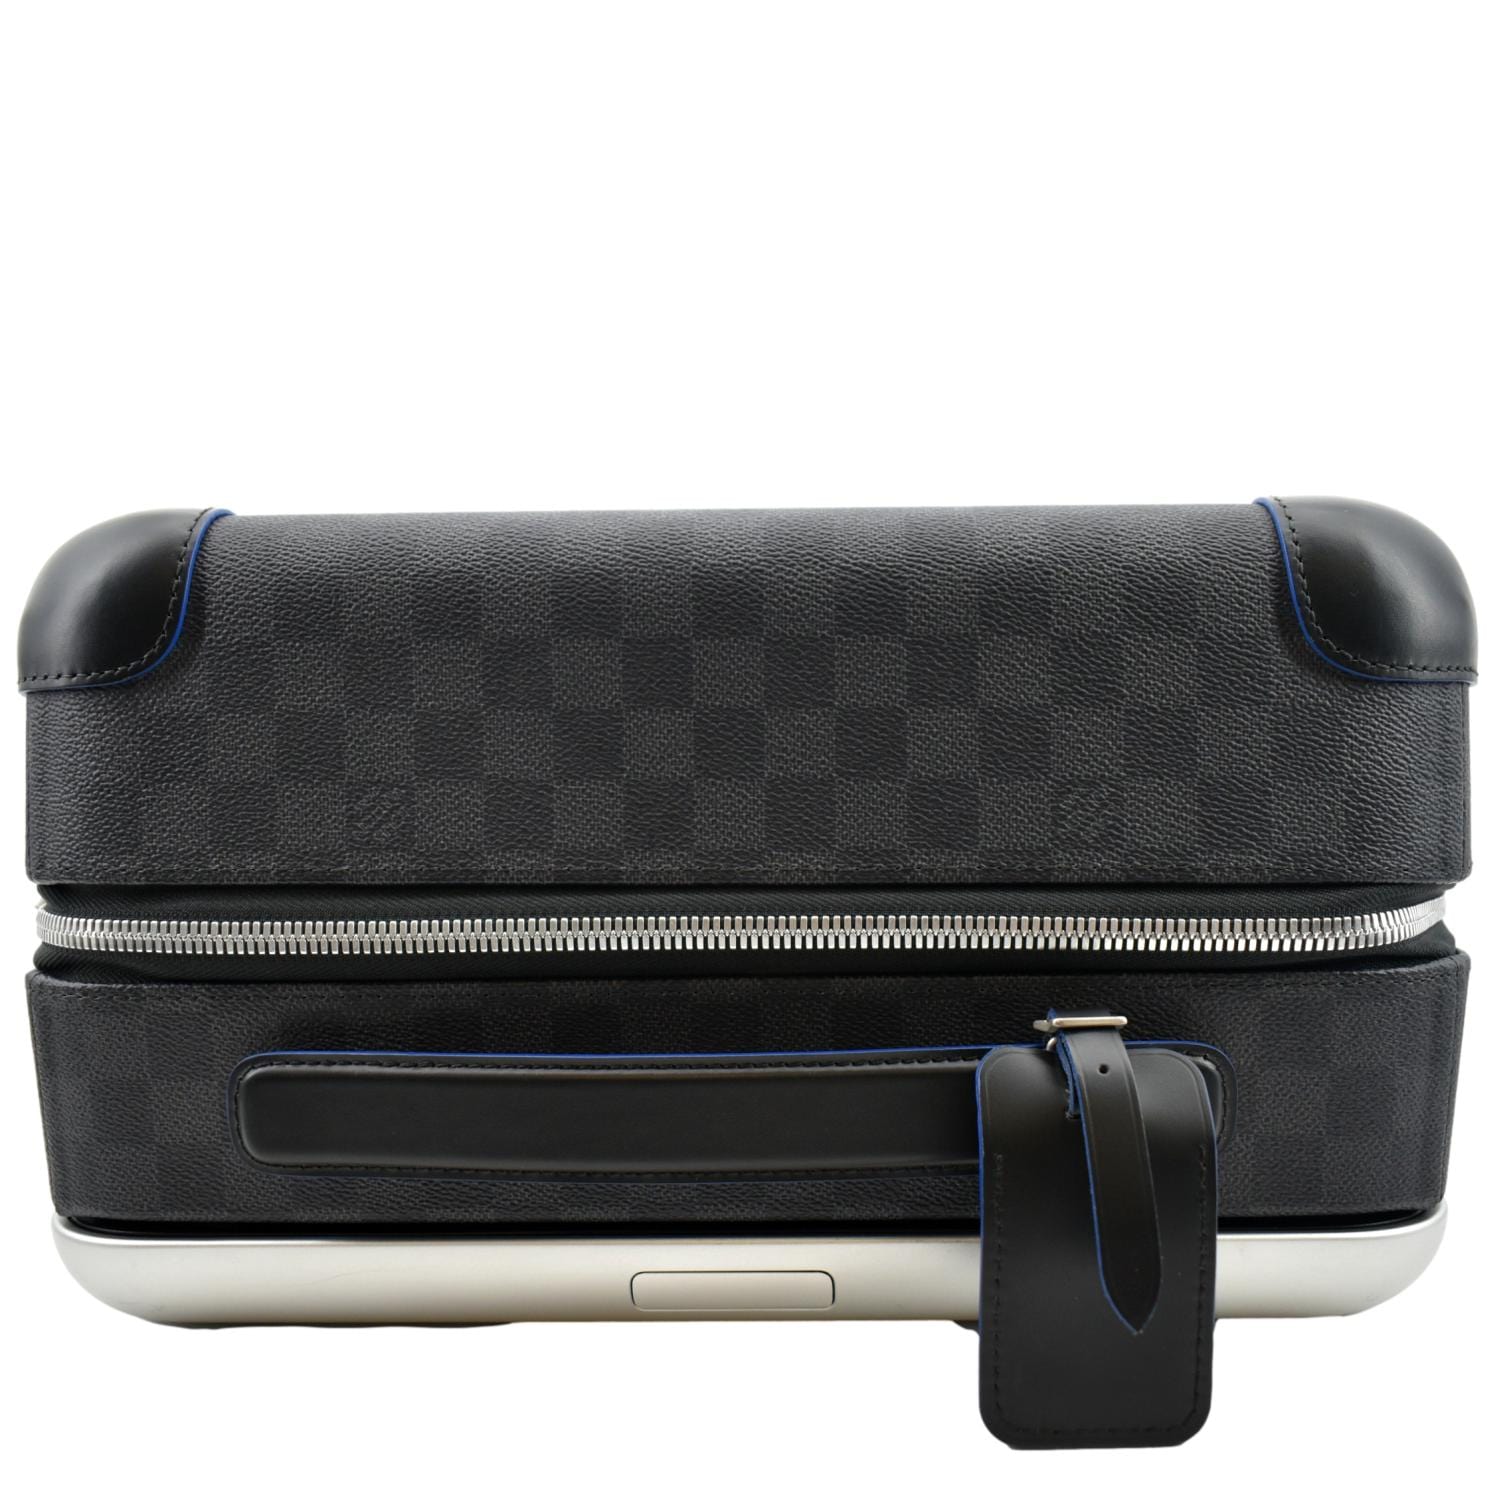 Black Epi leather Louis Vuitton Horizon 55cm rolling luggage at